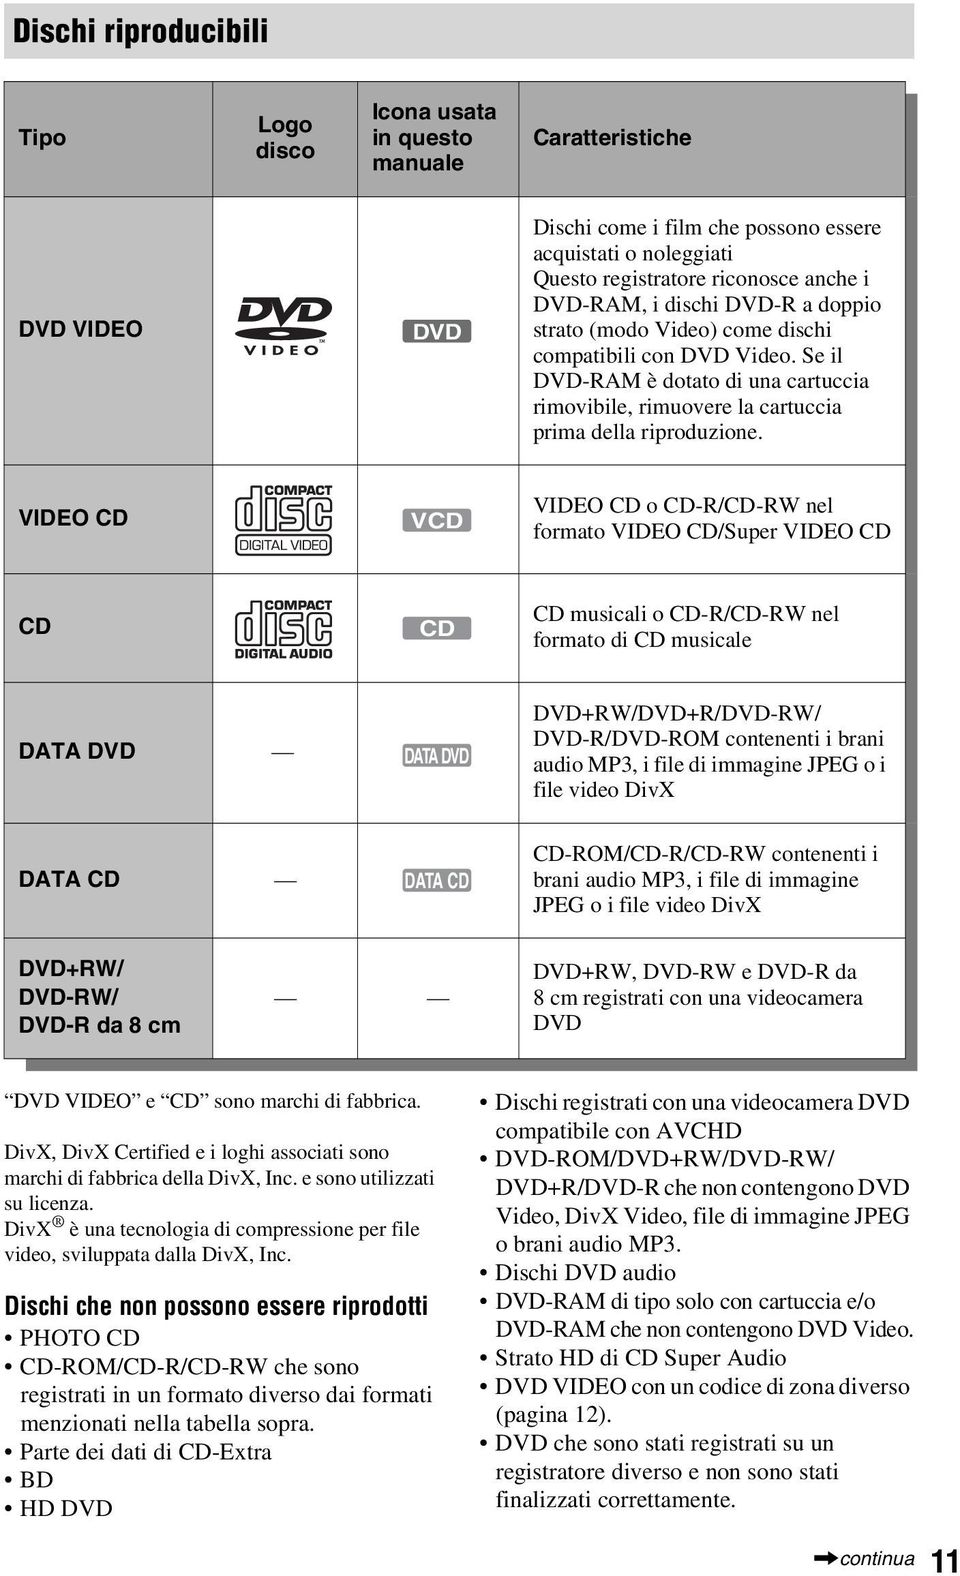 VIDEO CD VCD VIDEO CD o CD-R/CD-RW nel formato VIDEO CD/Super VIDEO CD CD CD CD musicali o CD-R/CD-RW nel formato di CD musicale DATA DVD DATA DVD DVD+RW/DVD+R/DVD-RW/ DVD-R/DVD-ROM contenenti i